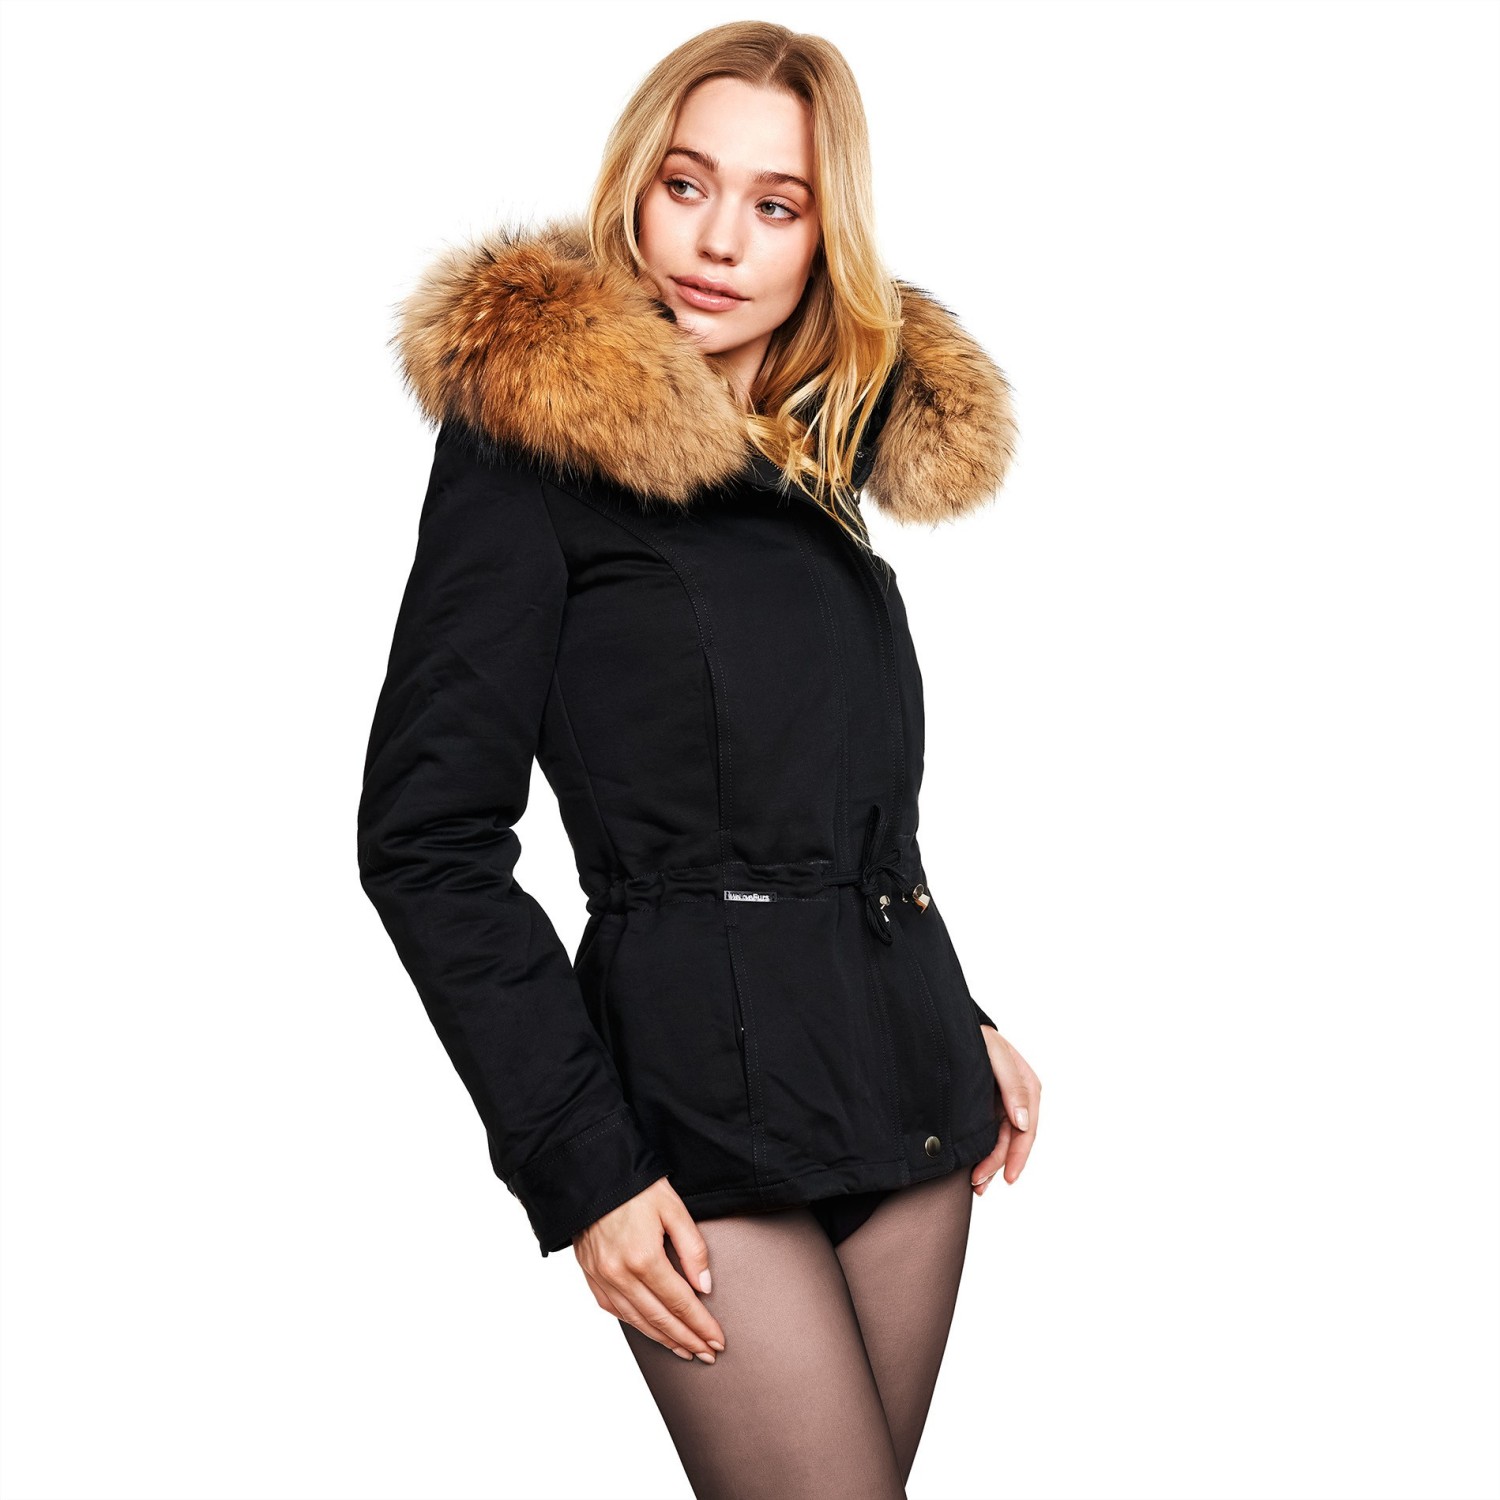 Fur hooded jacket with fur